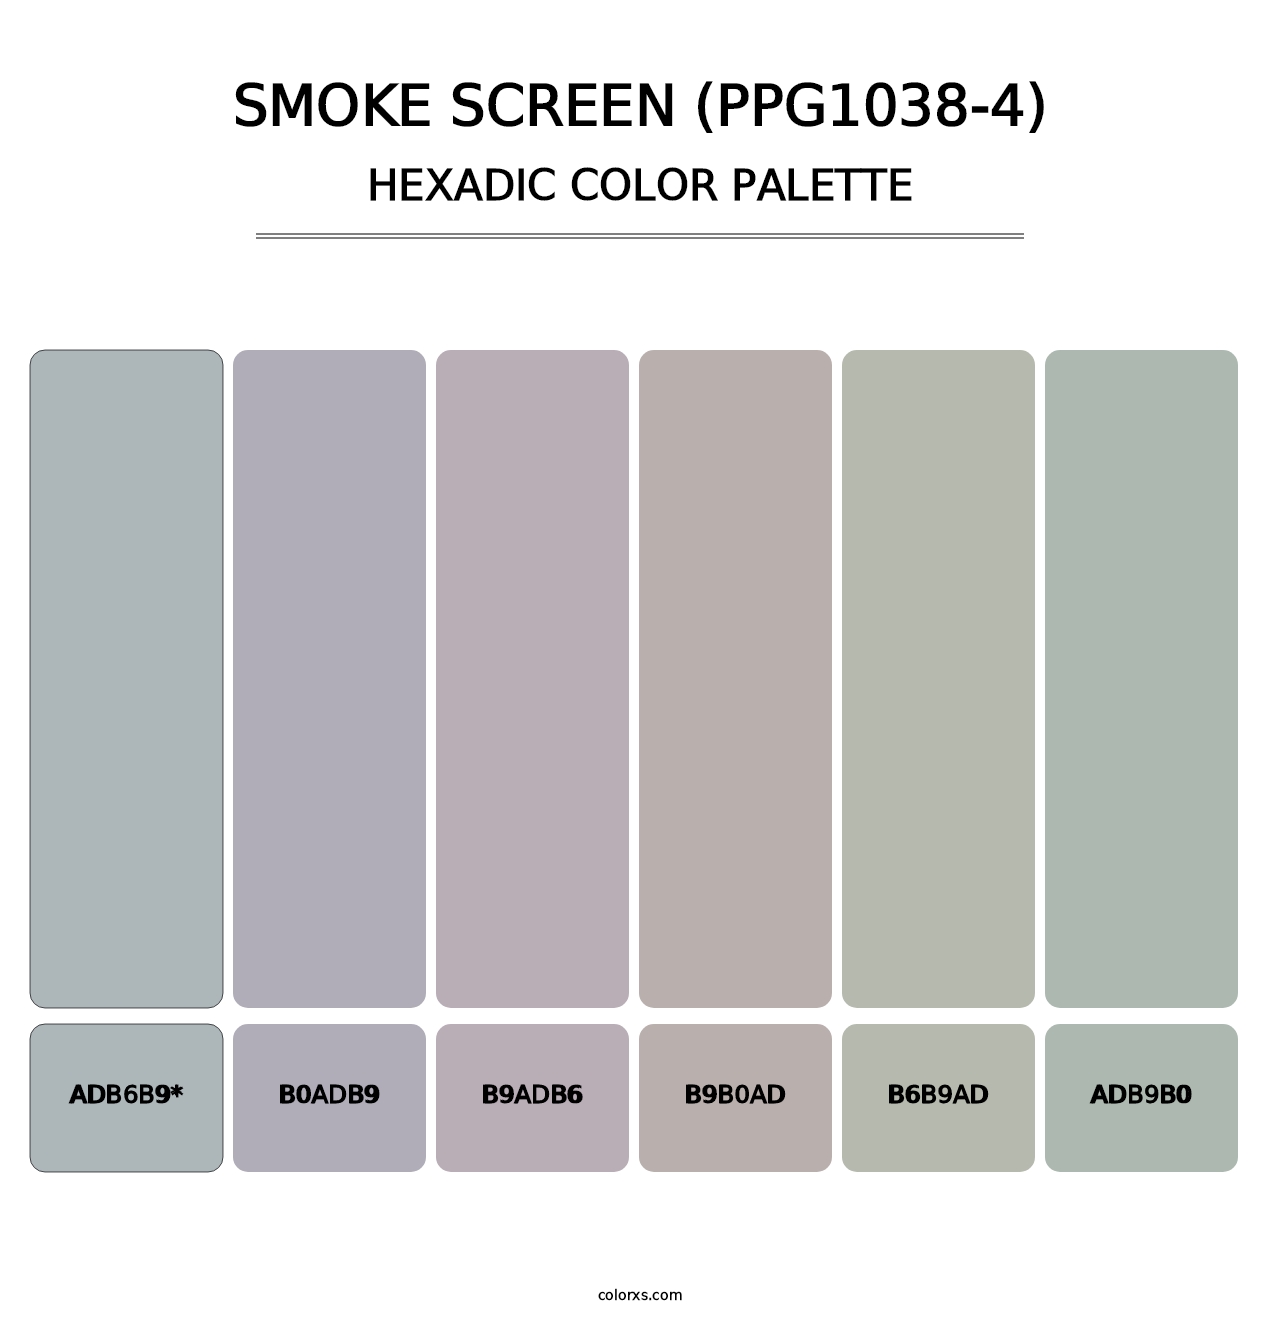 Smoke Screen (PPG1038-4) - Hexadic Color Palette